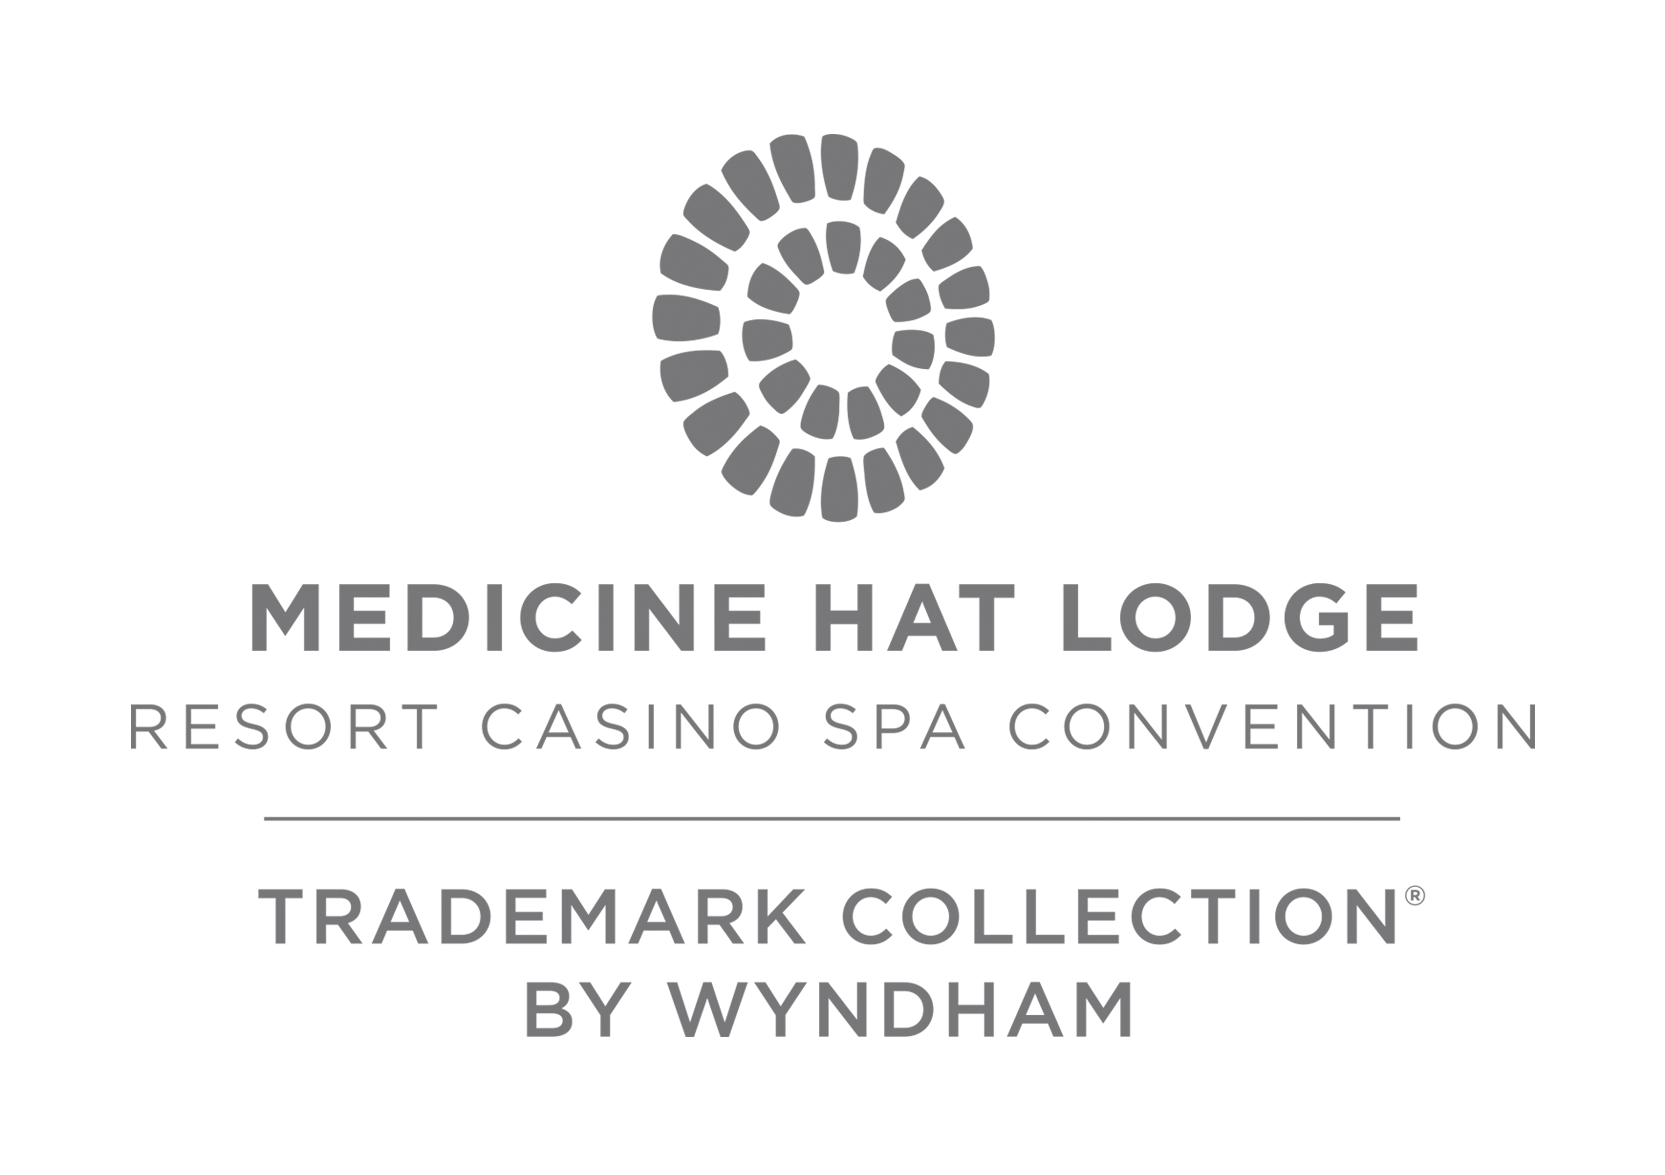 Medicine Hat Lodge